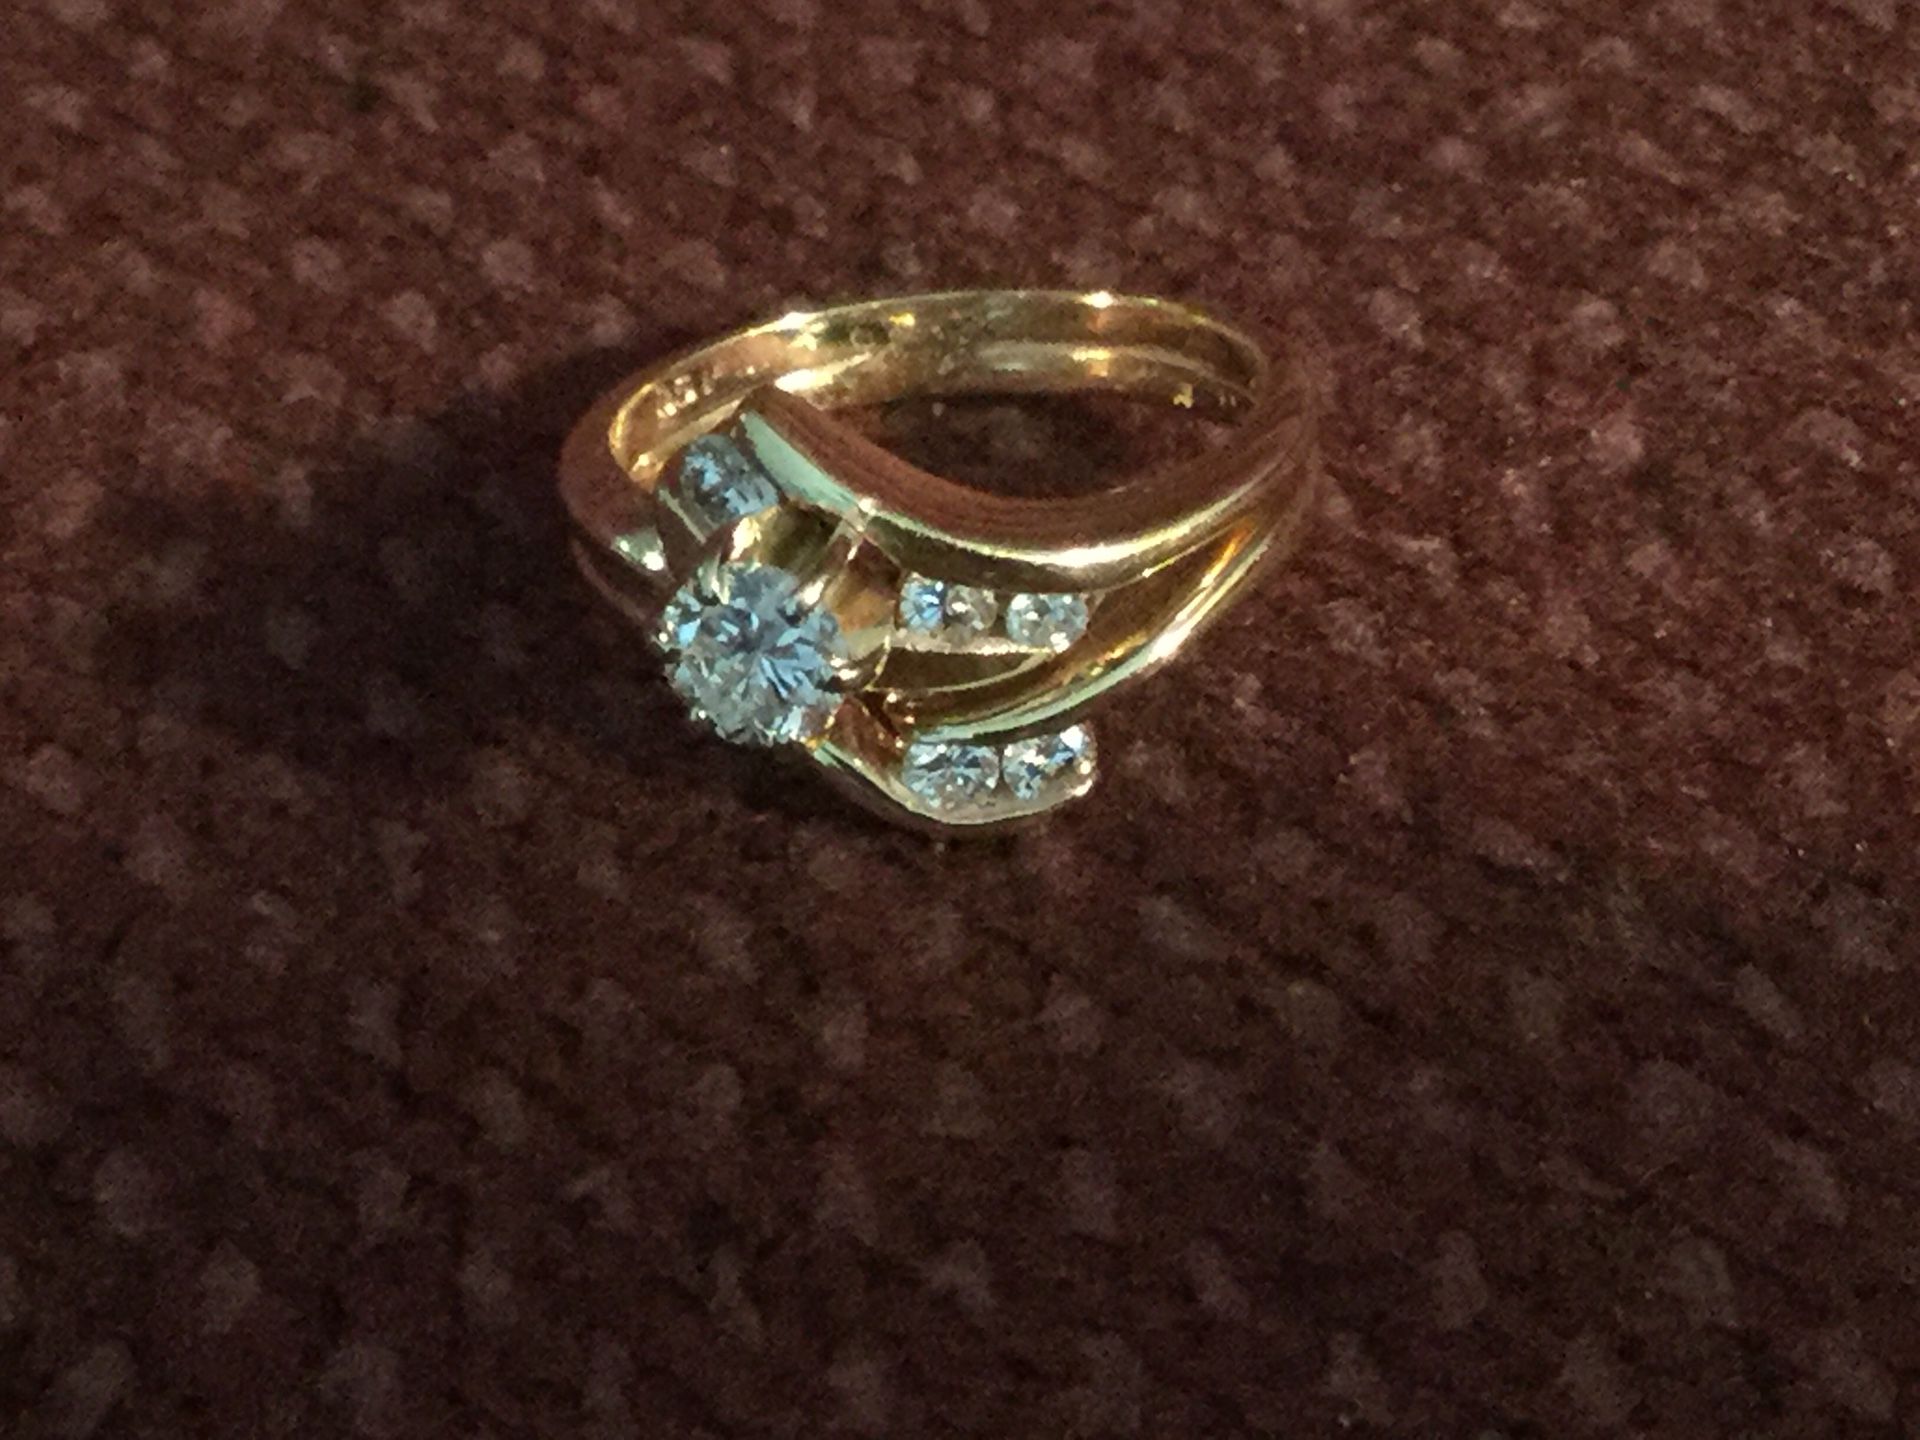 Diamond Ring — Engagement and Wedding Band set — 0.56 carat total diamond wt., 14K yellow gold, size 7